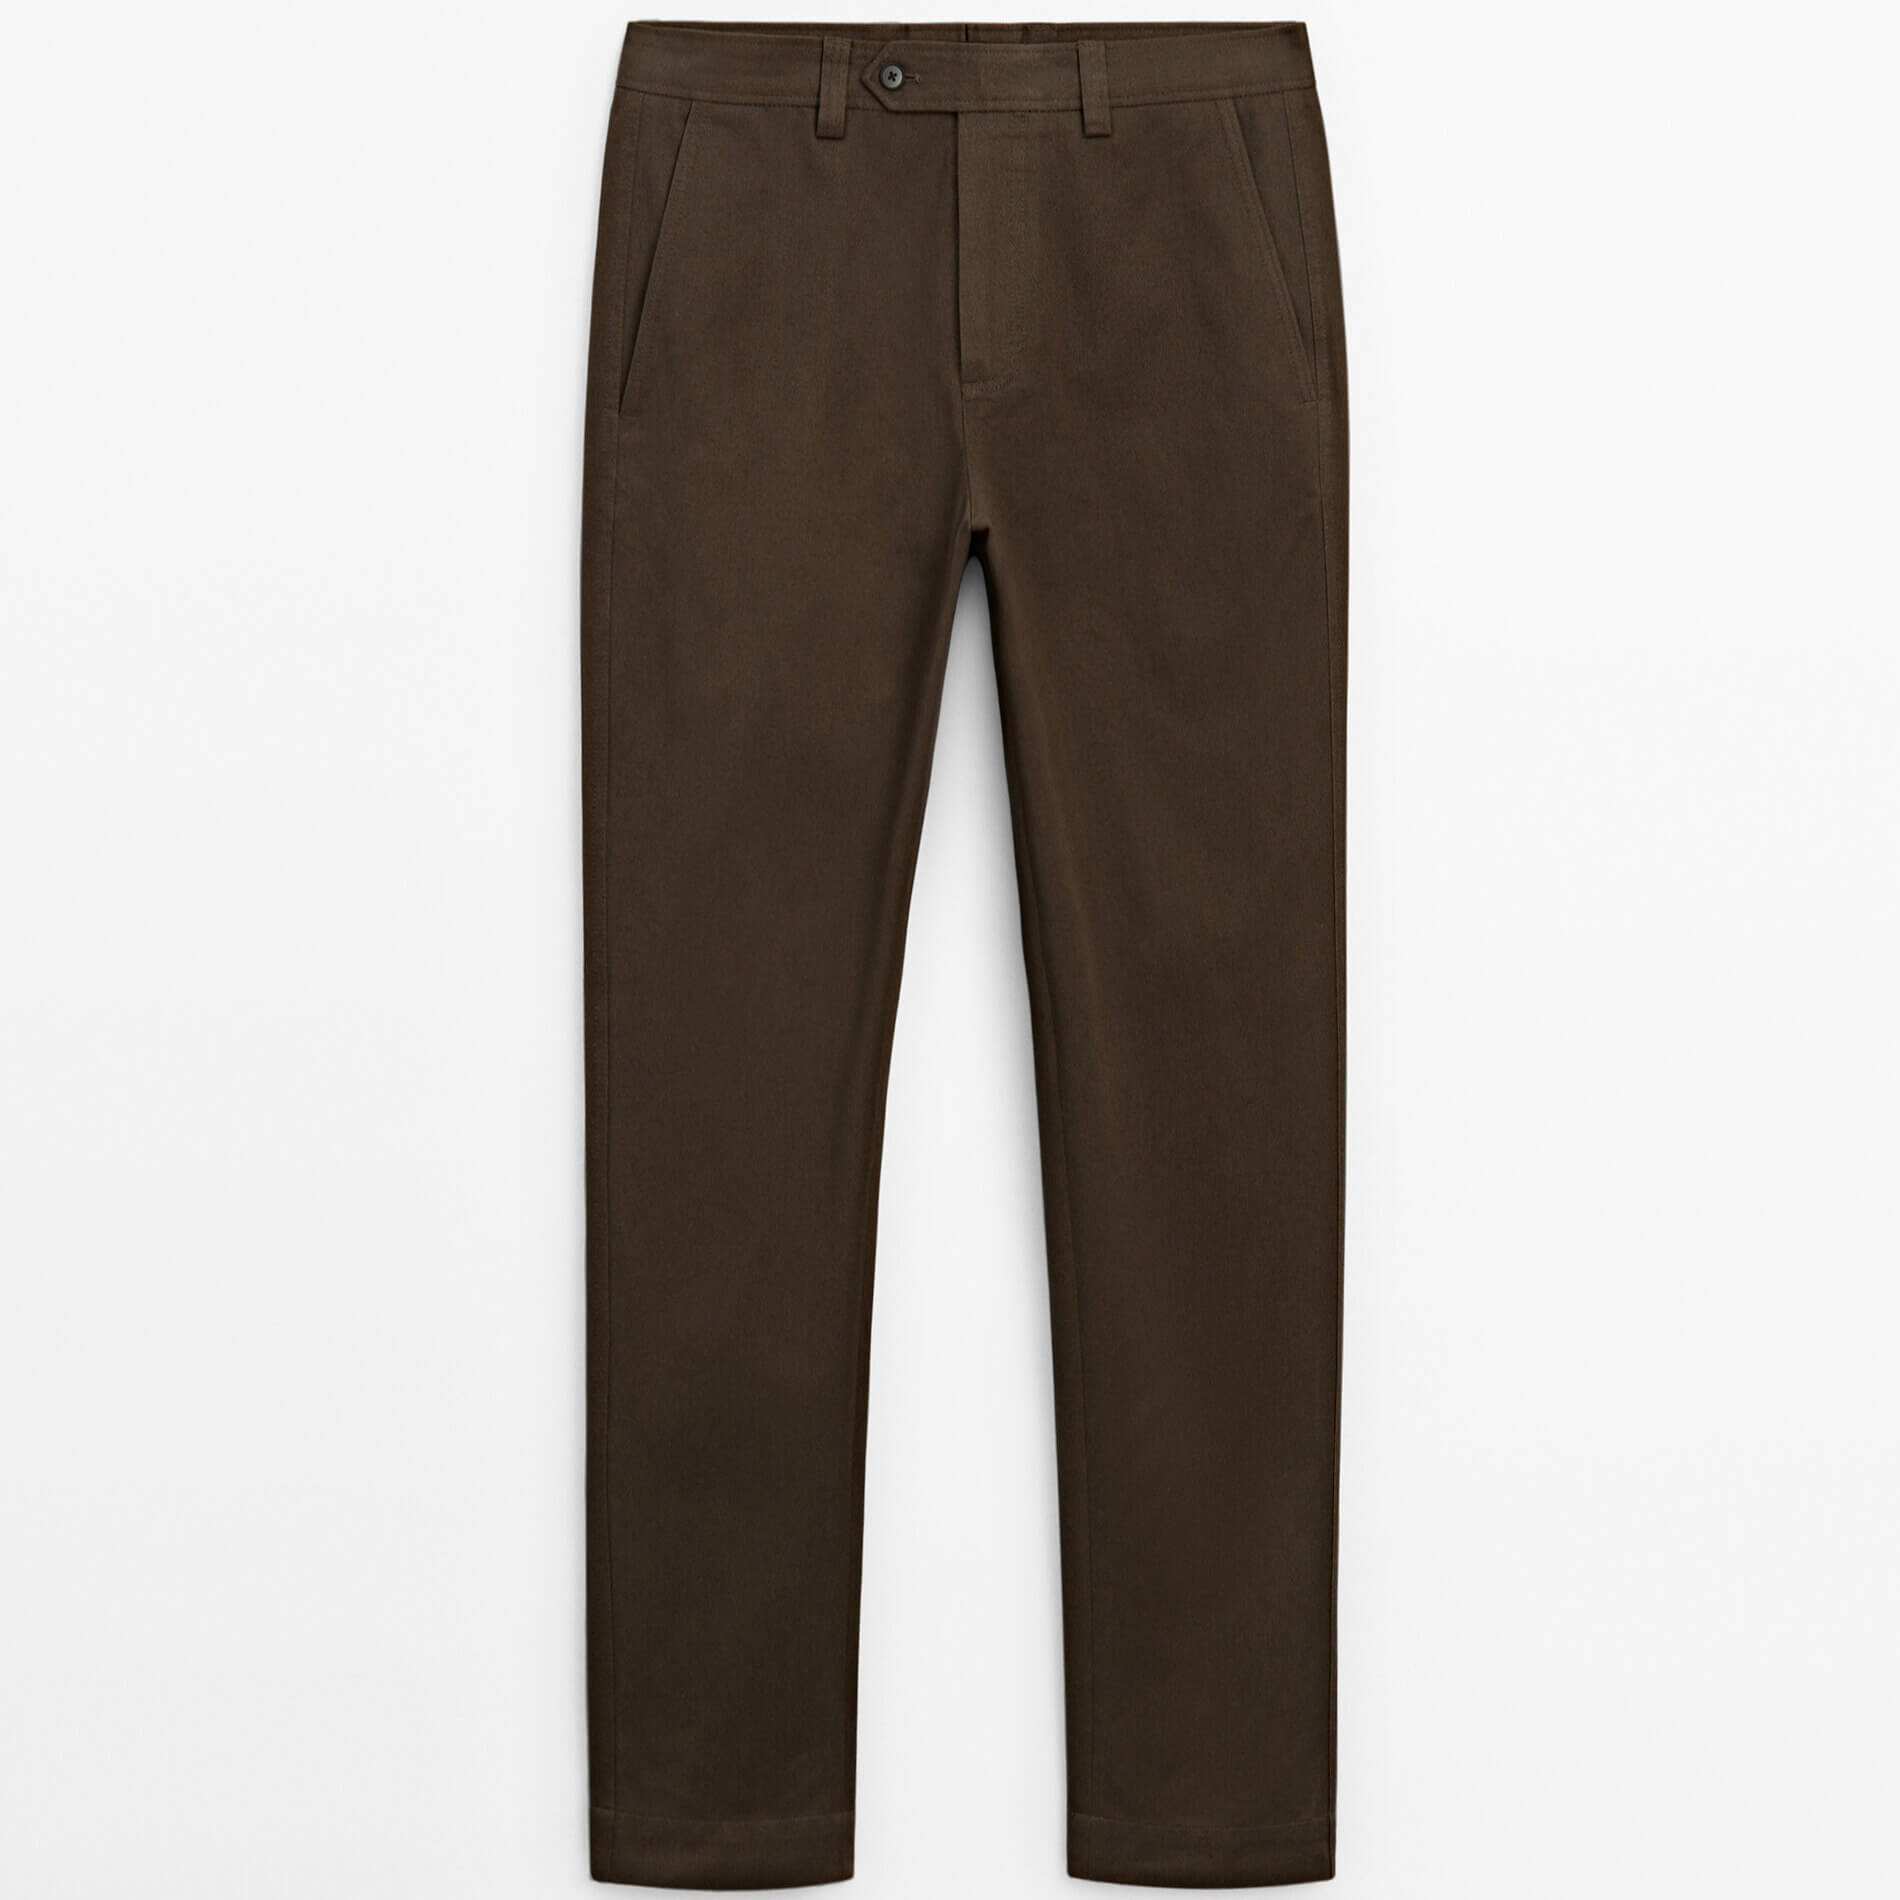 Брюки Massimo Dutti Cotton Wide Fit Studio, коричневый брюки uniqlo wide fit work коричневый